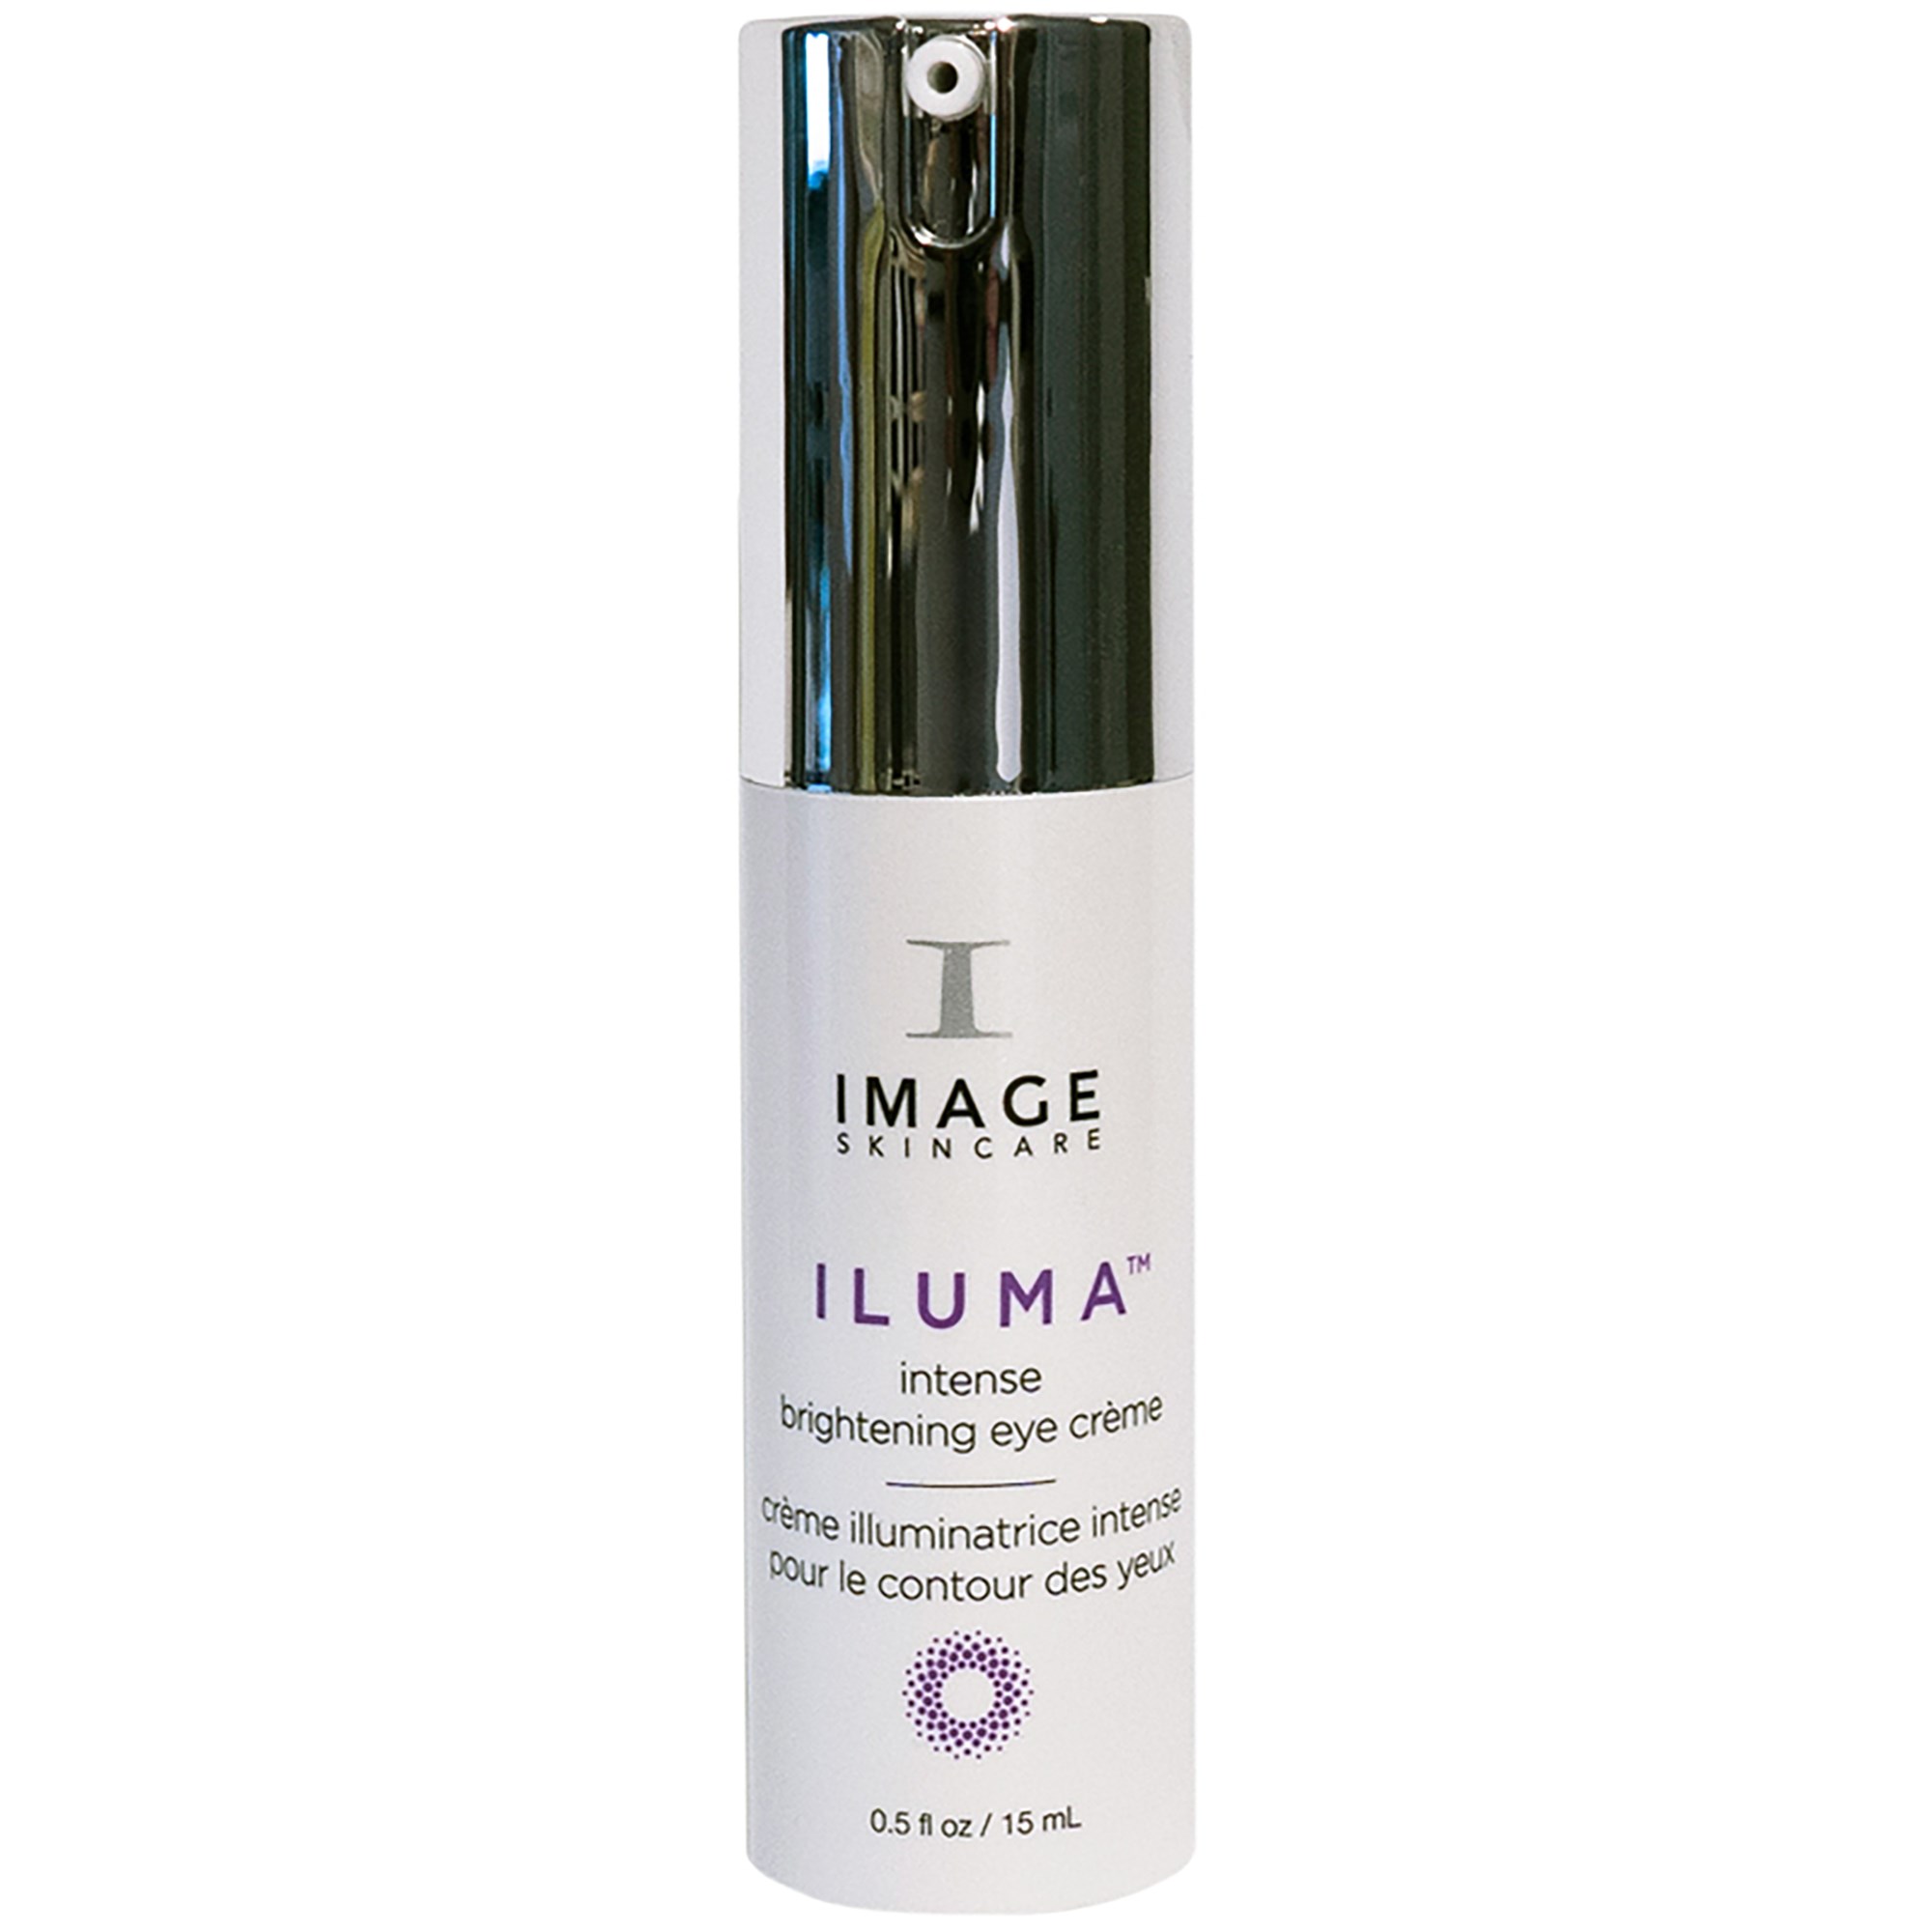 IMAGE Skincare Iluma® Intense Brightening Eye Creme 15 ml